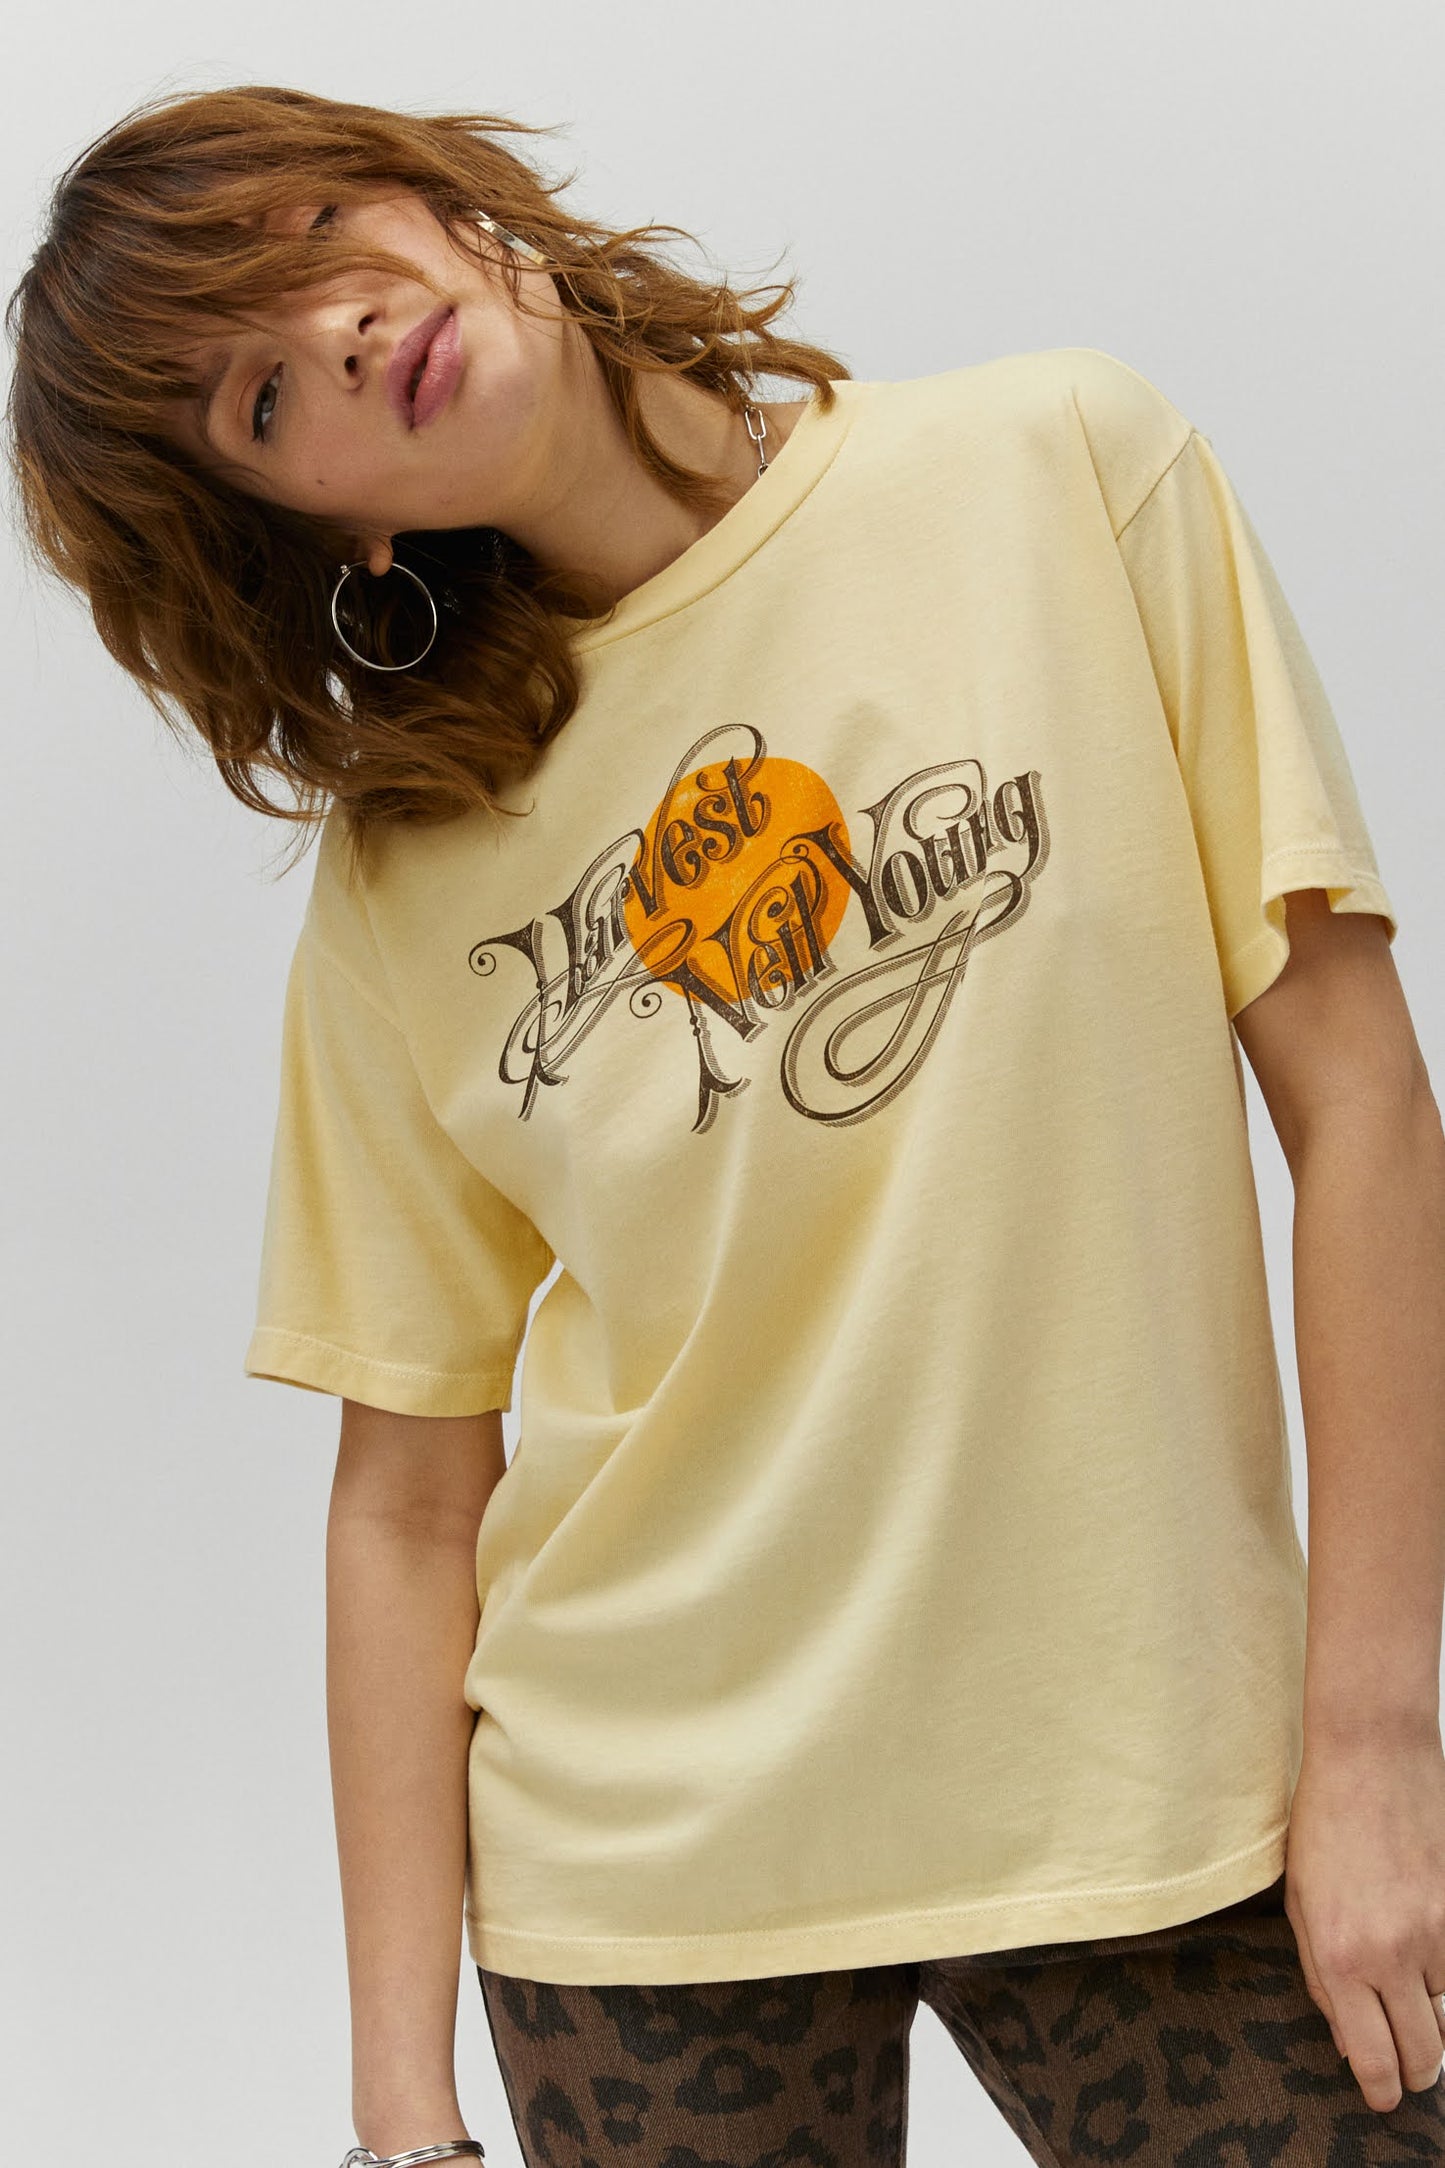 Neil Young shirt